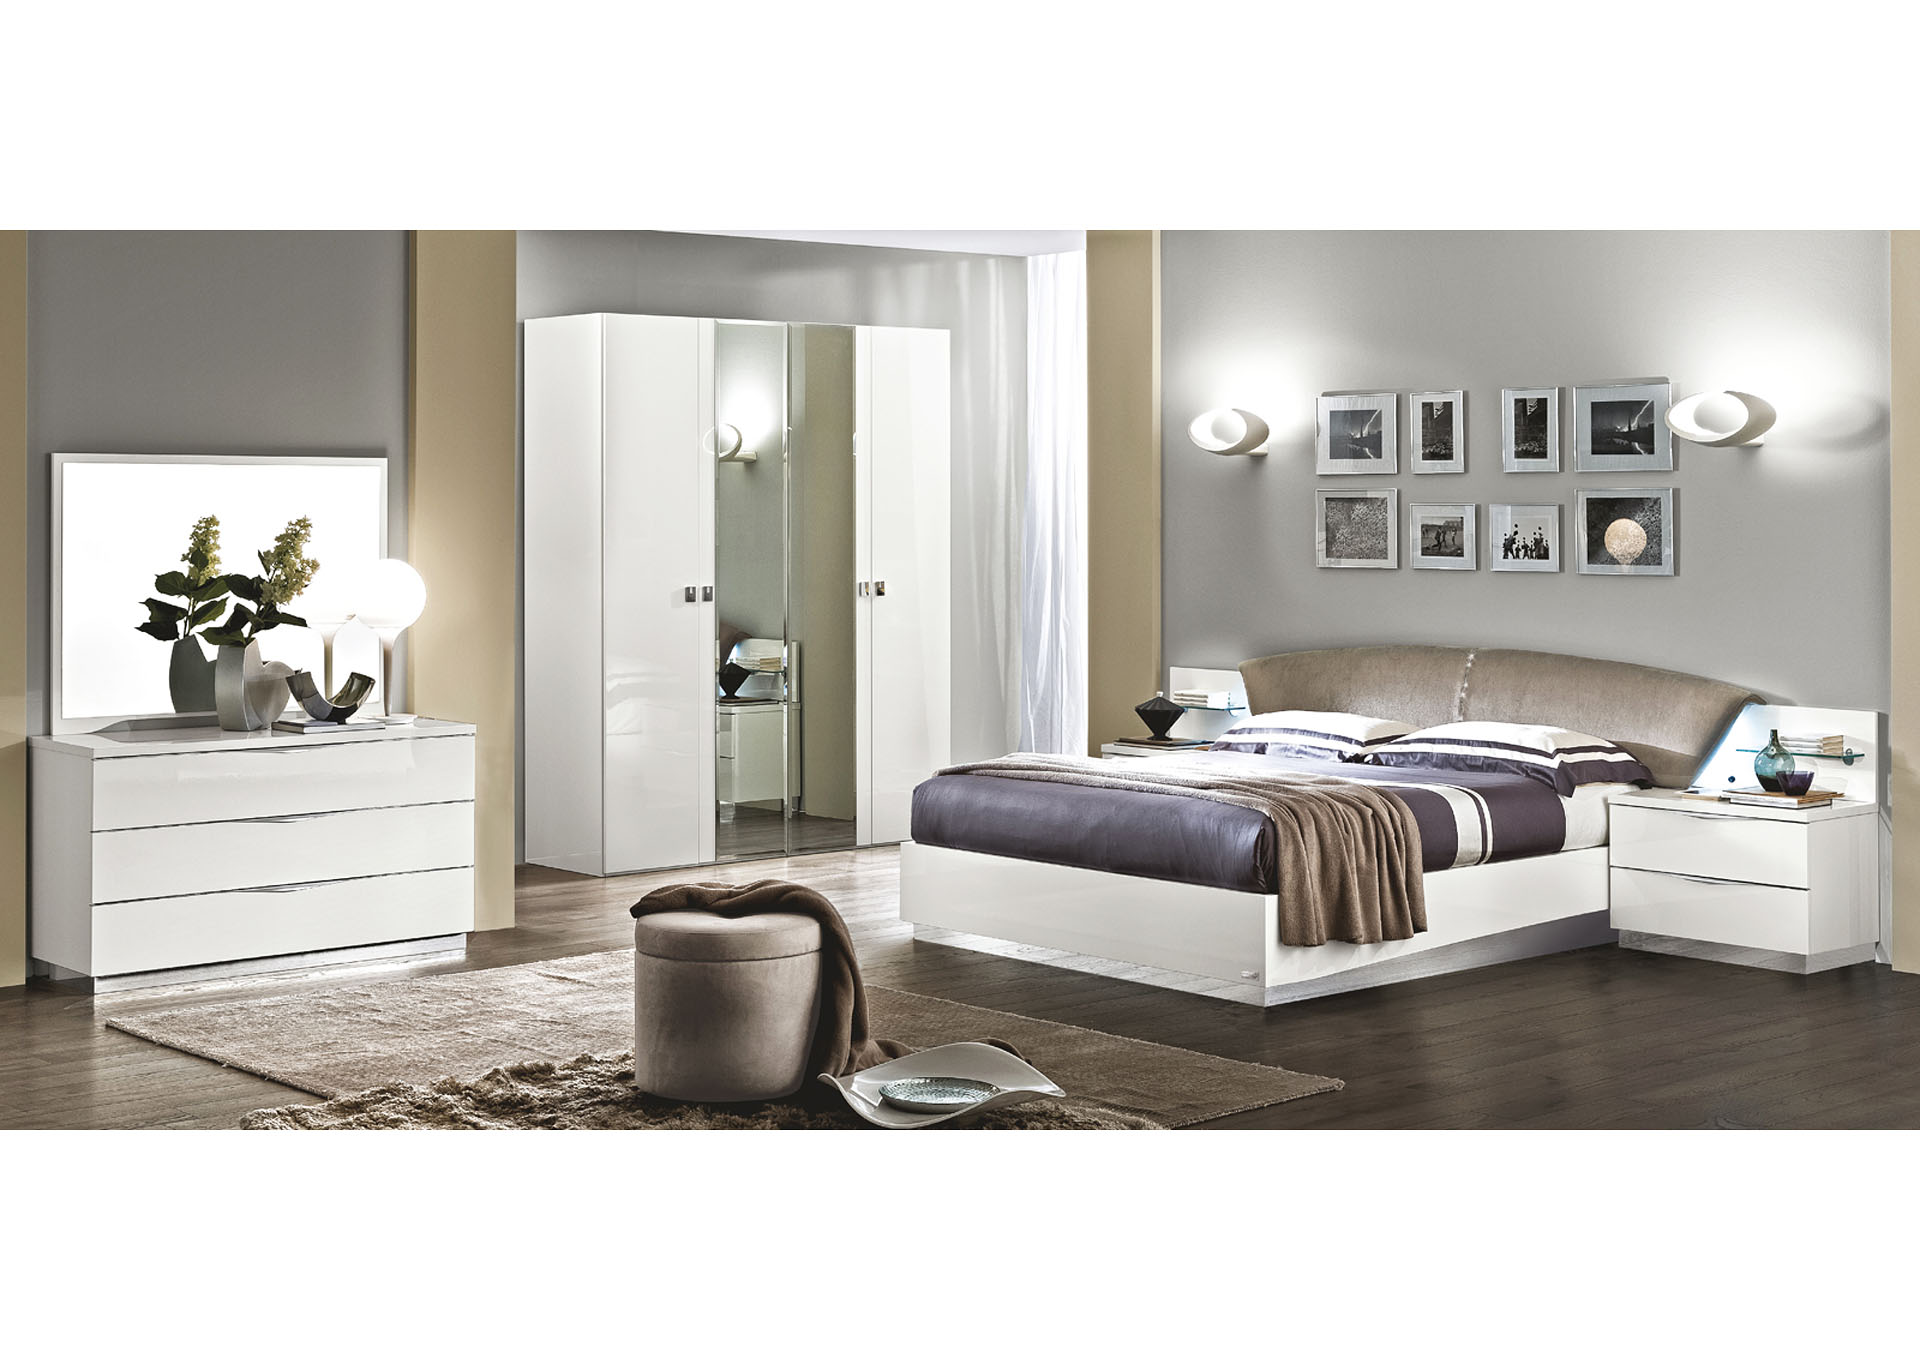 Onda Beige & White Camel Legs Frame King Bed W/ Dresser & Mirror,ESF Wholesale Furniture